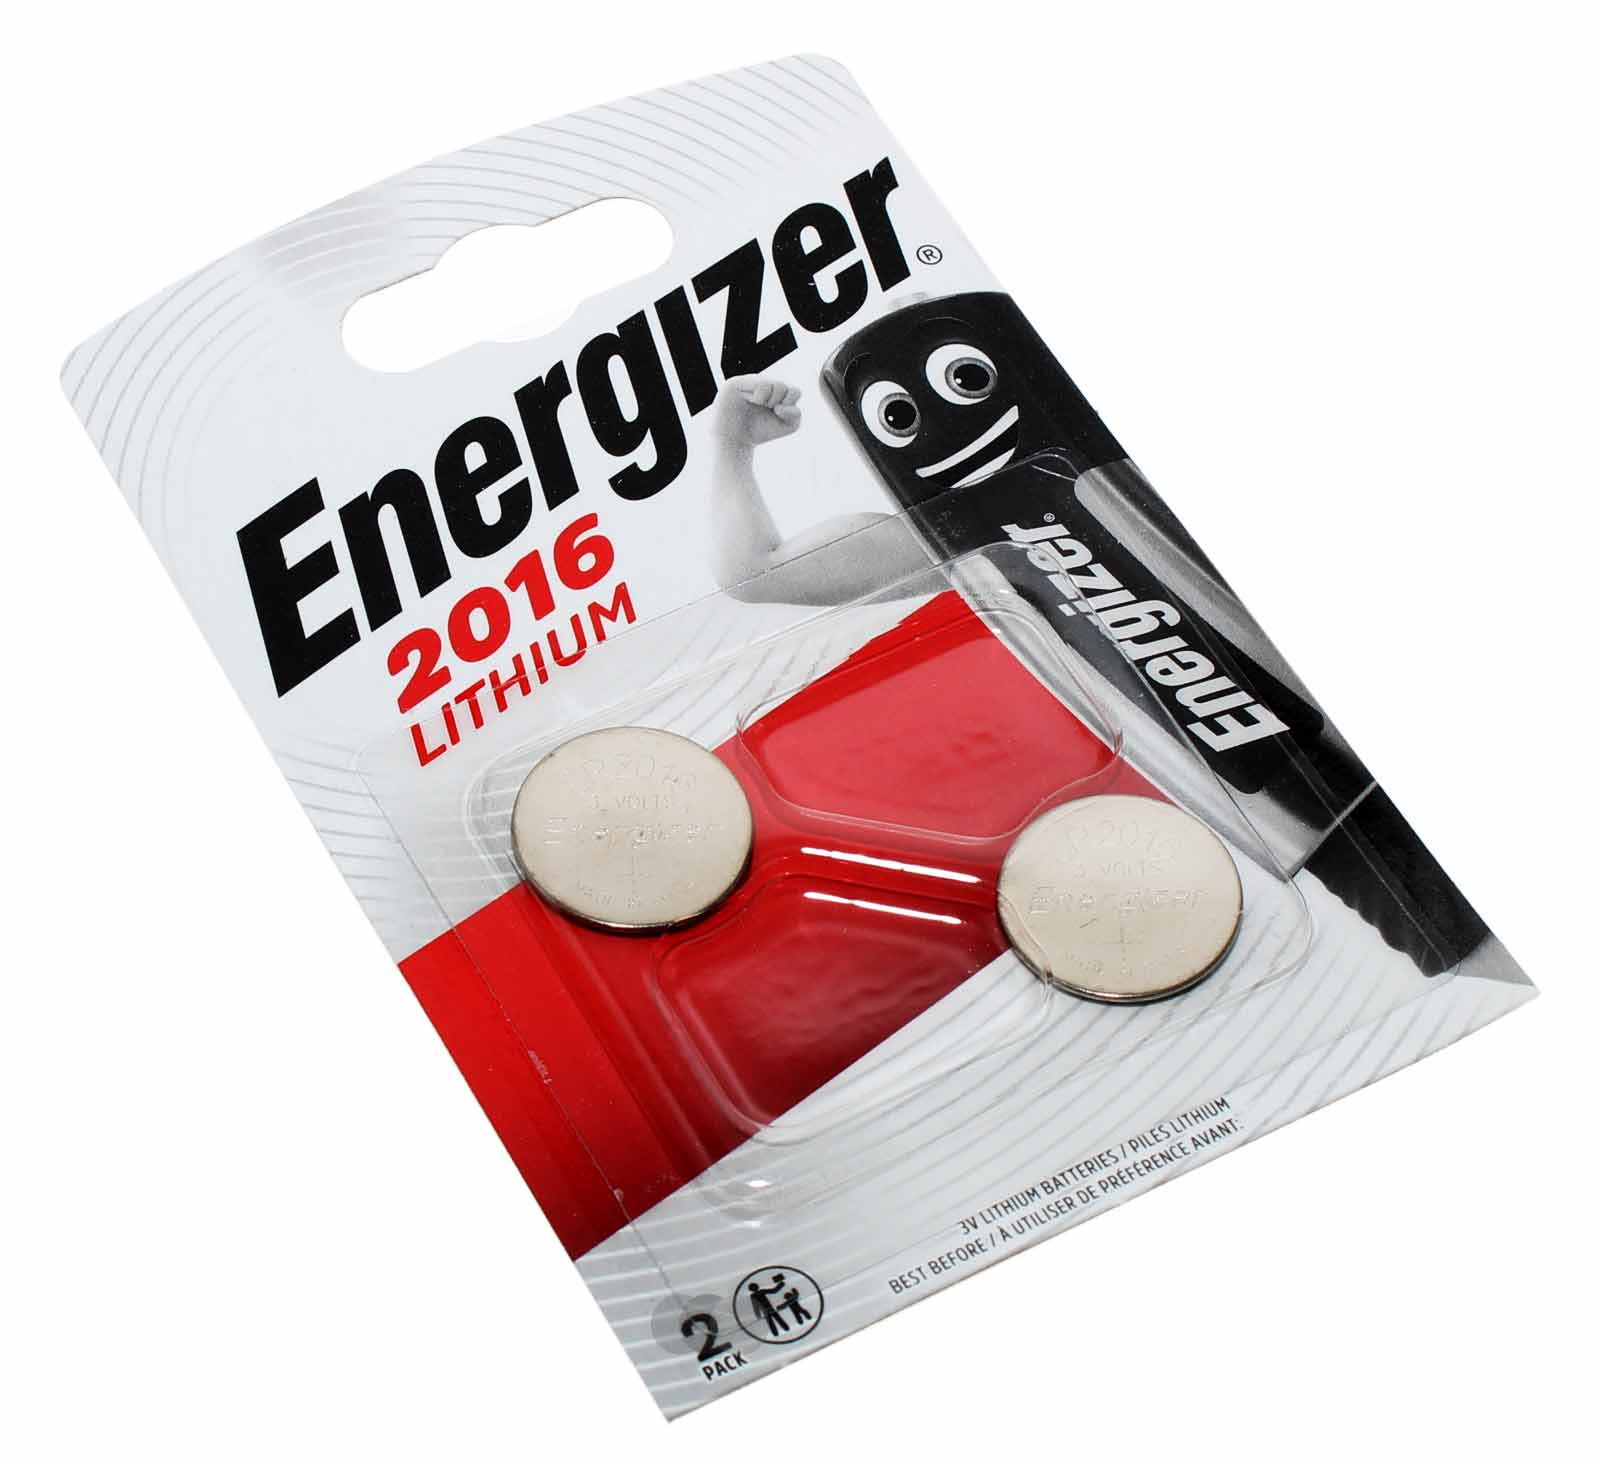 2x Energizer 2016 Lithium Knopfzelle Batterie (CR2016), BR2016, DL2016, ECR2016, 3V, 90mAh